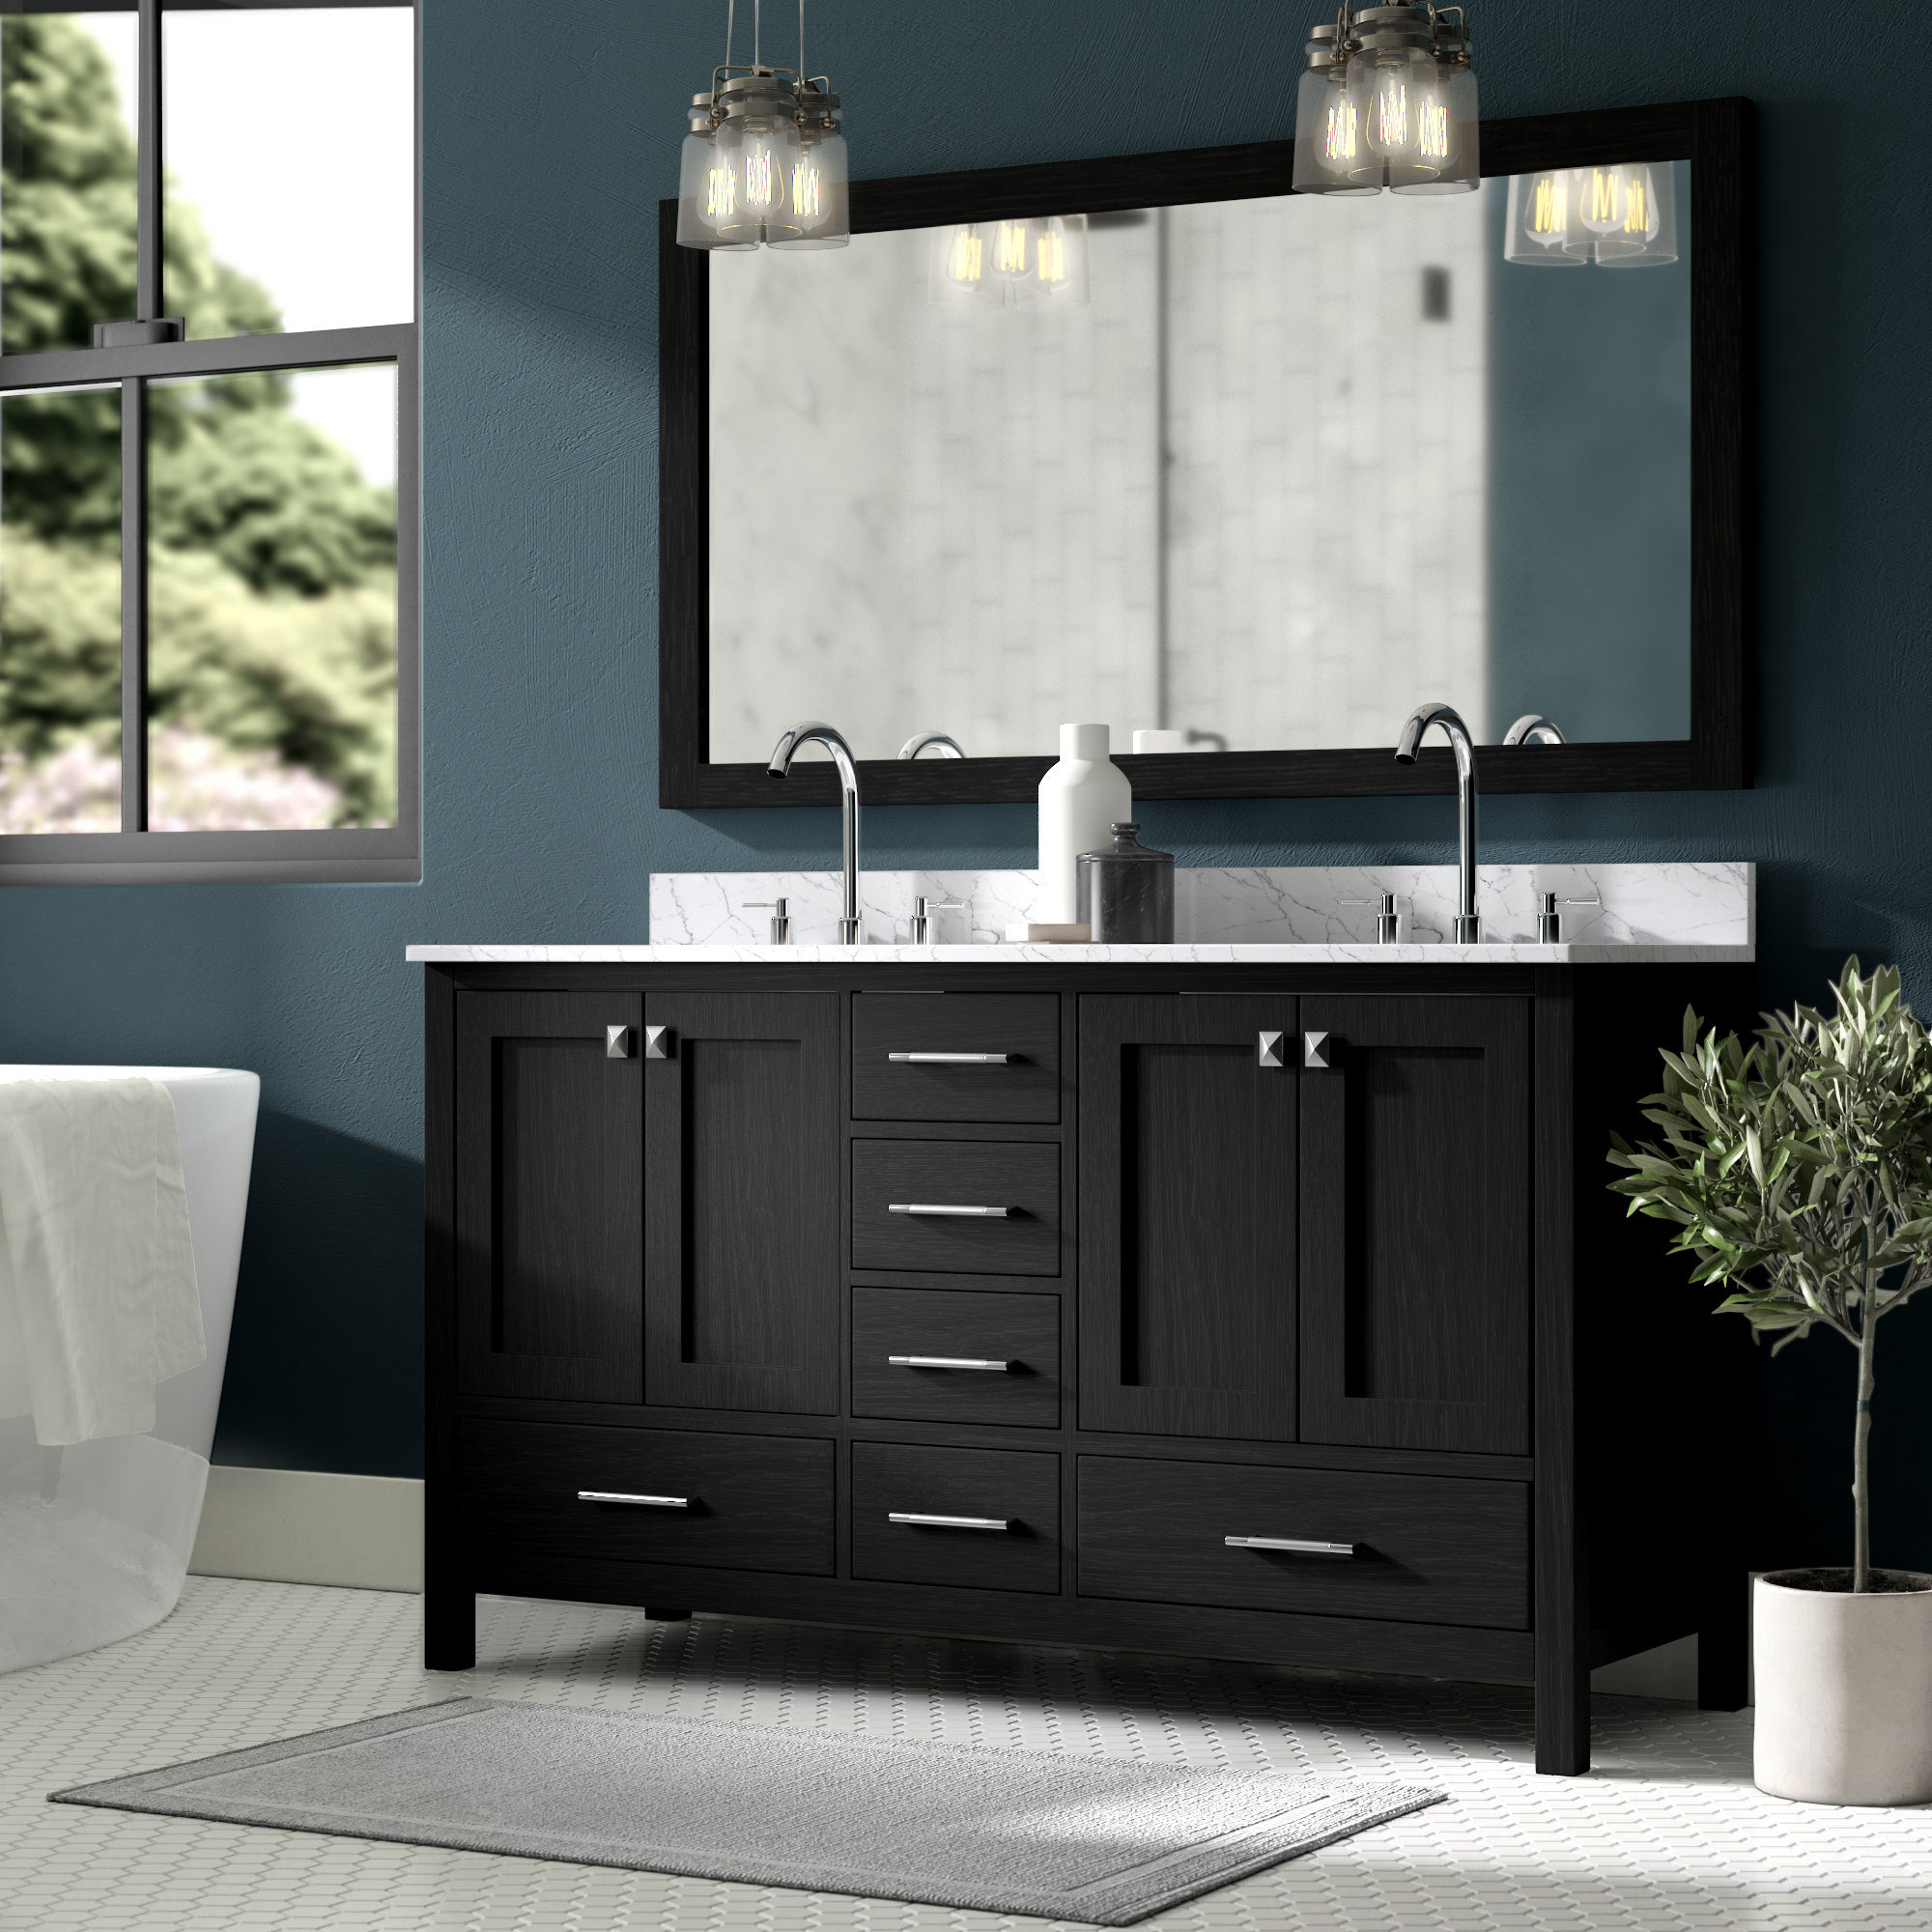 Ebern Designs Iadrik 60 Double Bathroom Vanity Set With White Marble Top And Mirror Reviews Wayfair